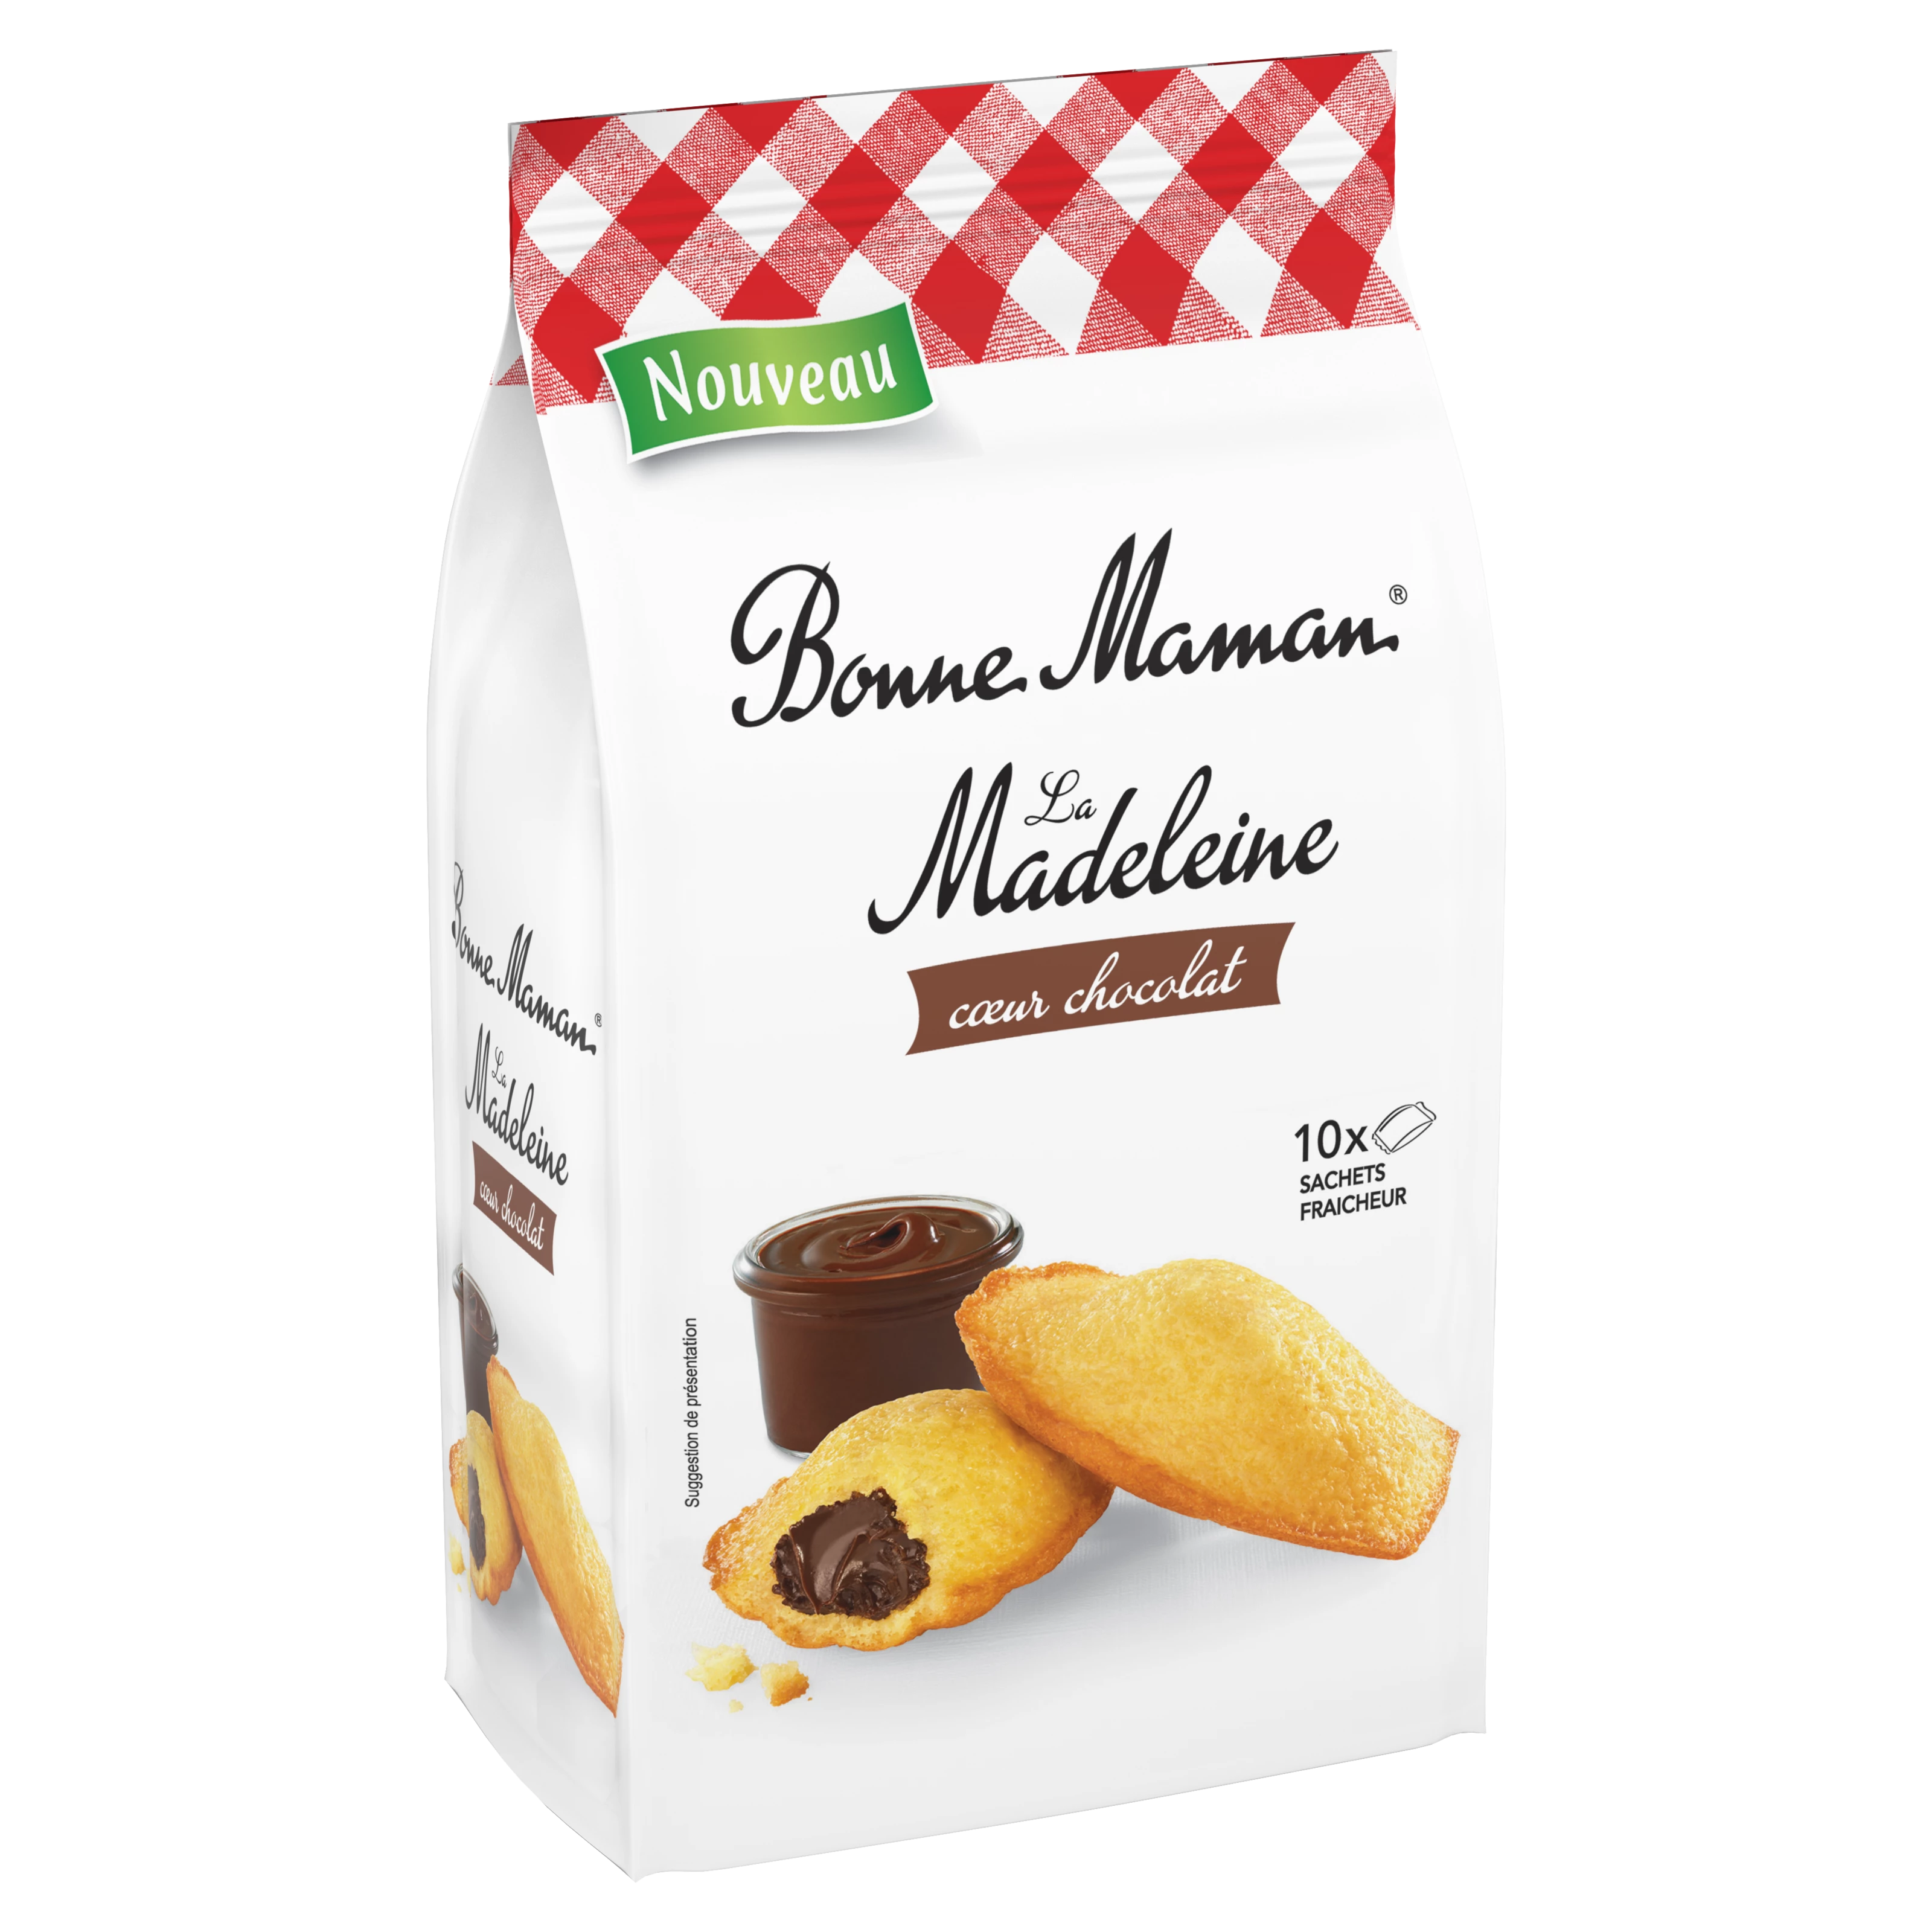 Madeleine Heart Chocolate 300g - BONNE MAMAN